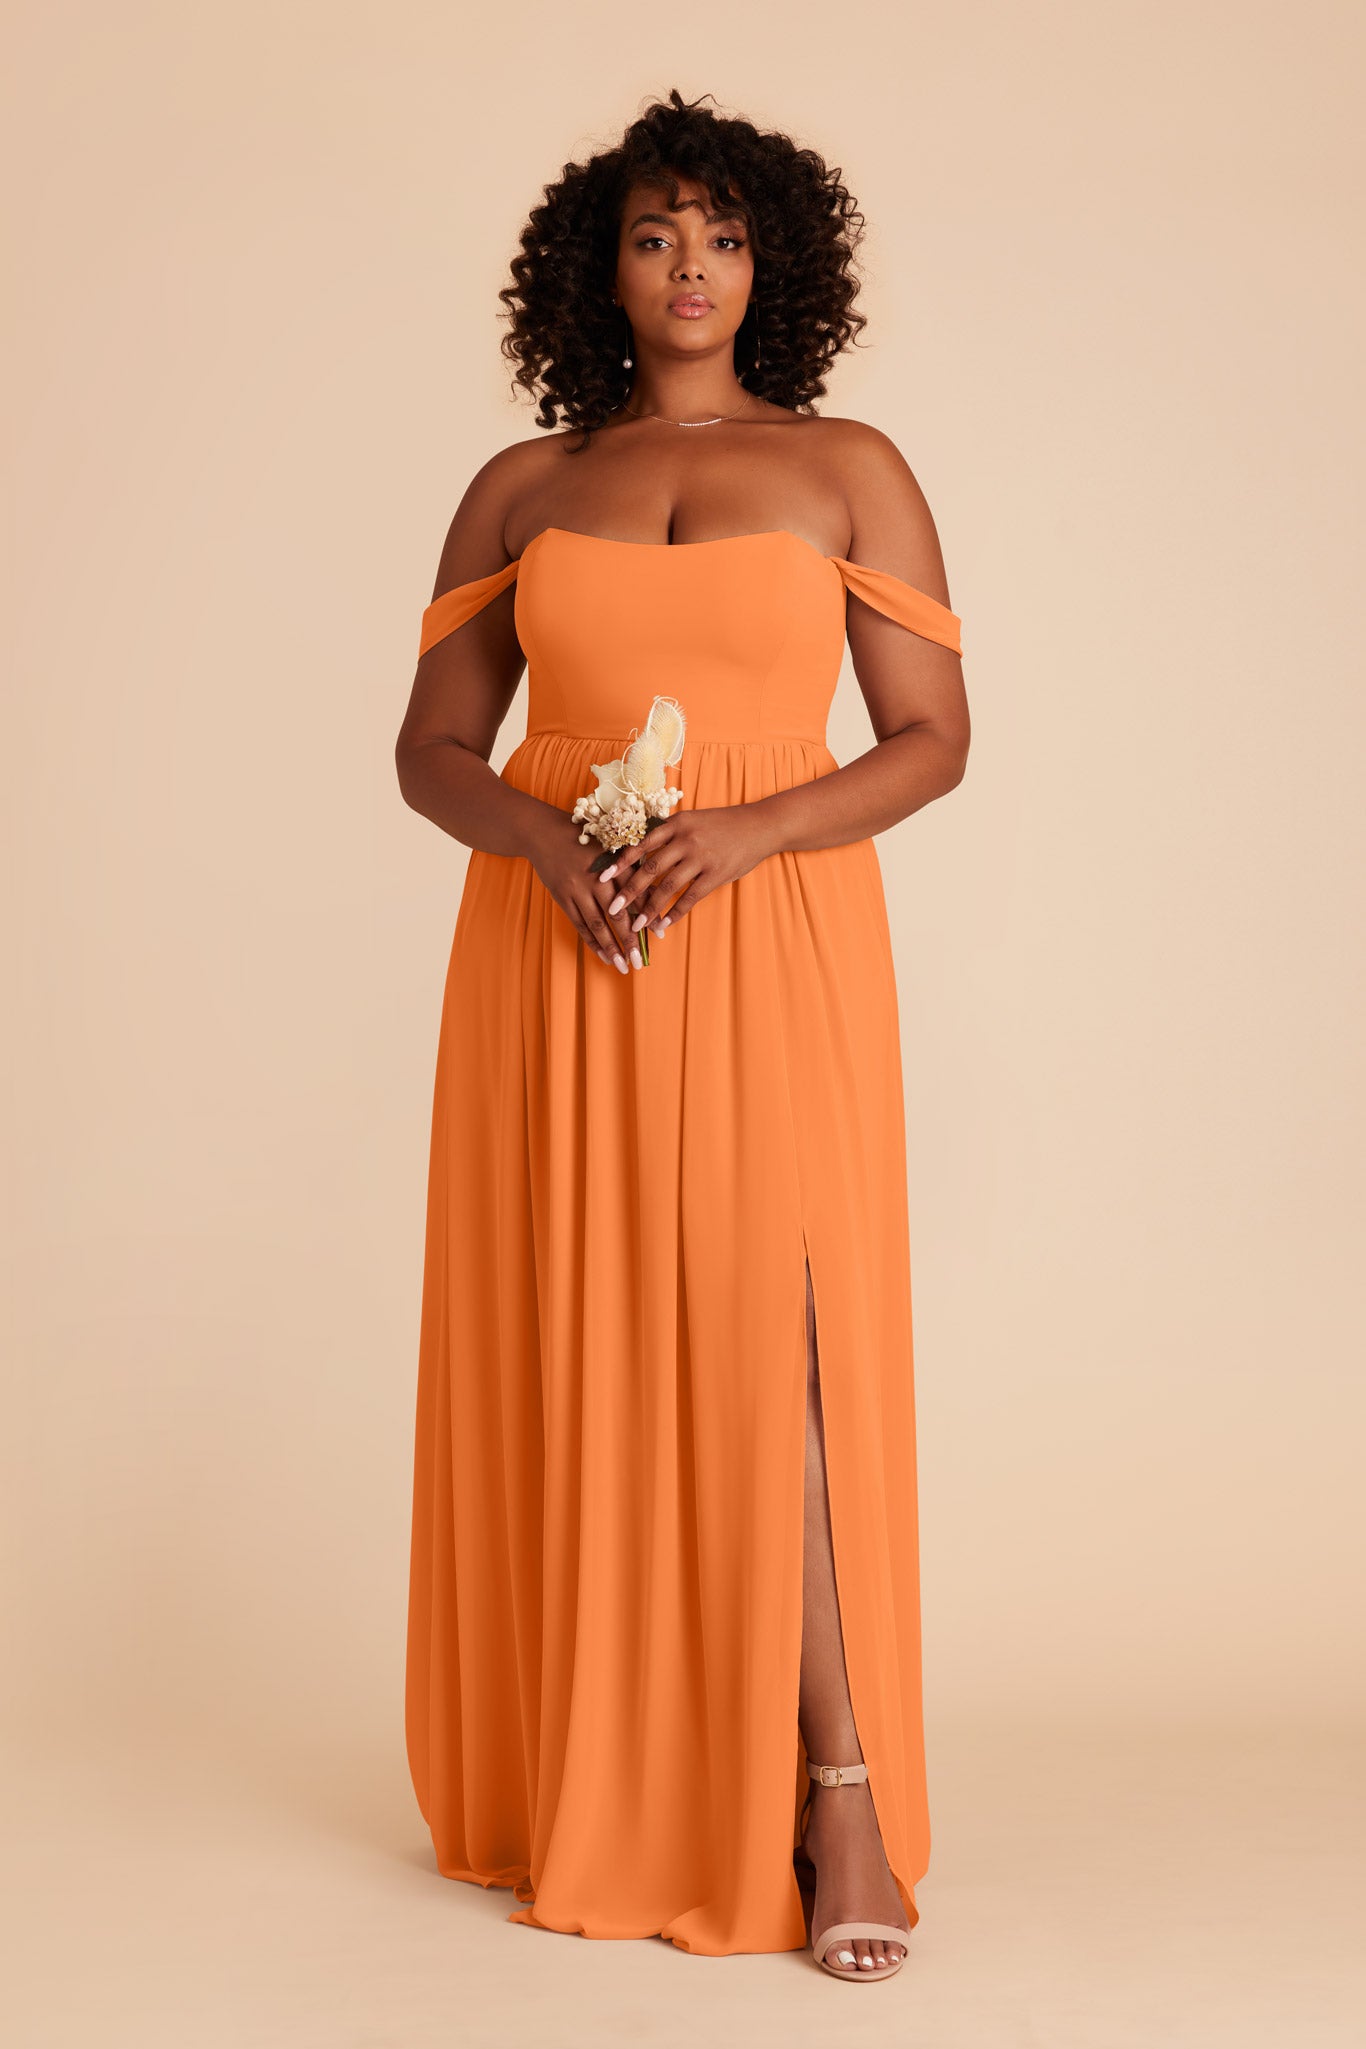 August Convertible Apricot Bridesmaid Dress